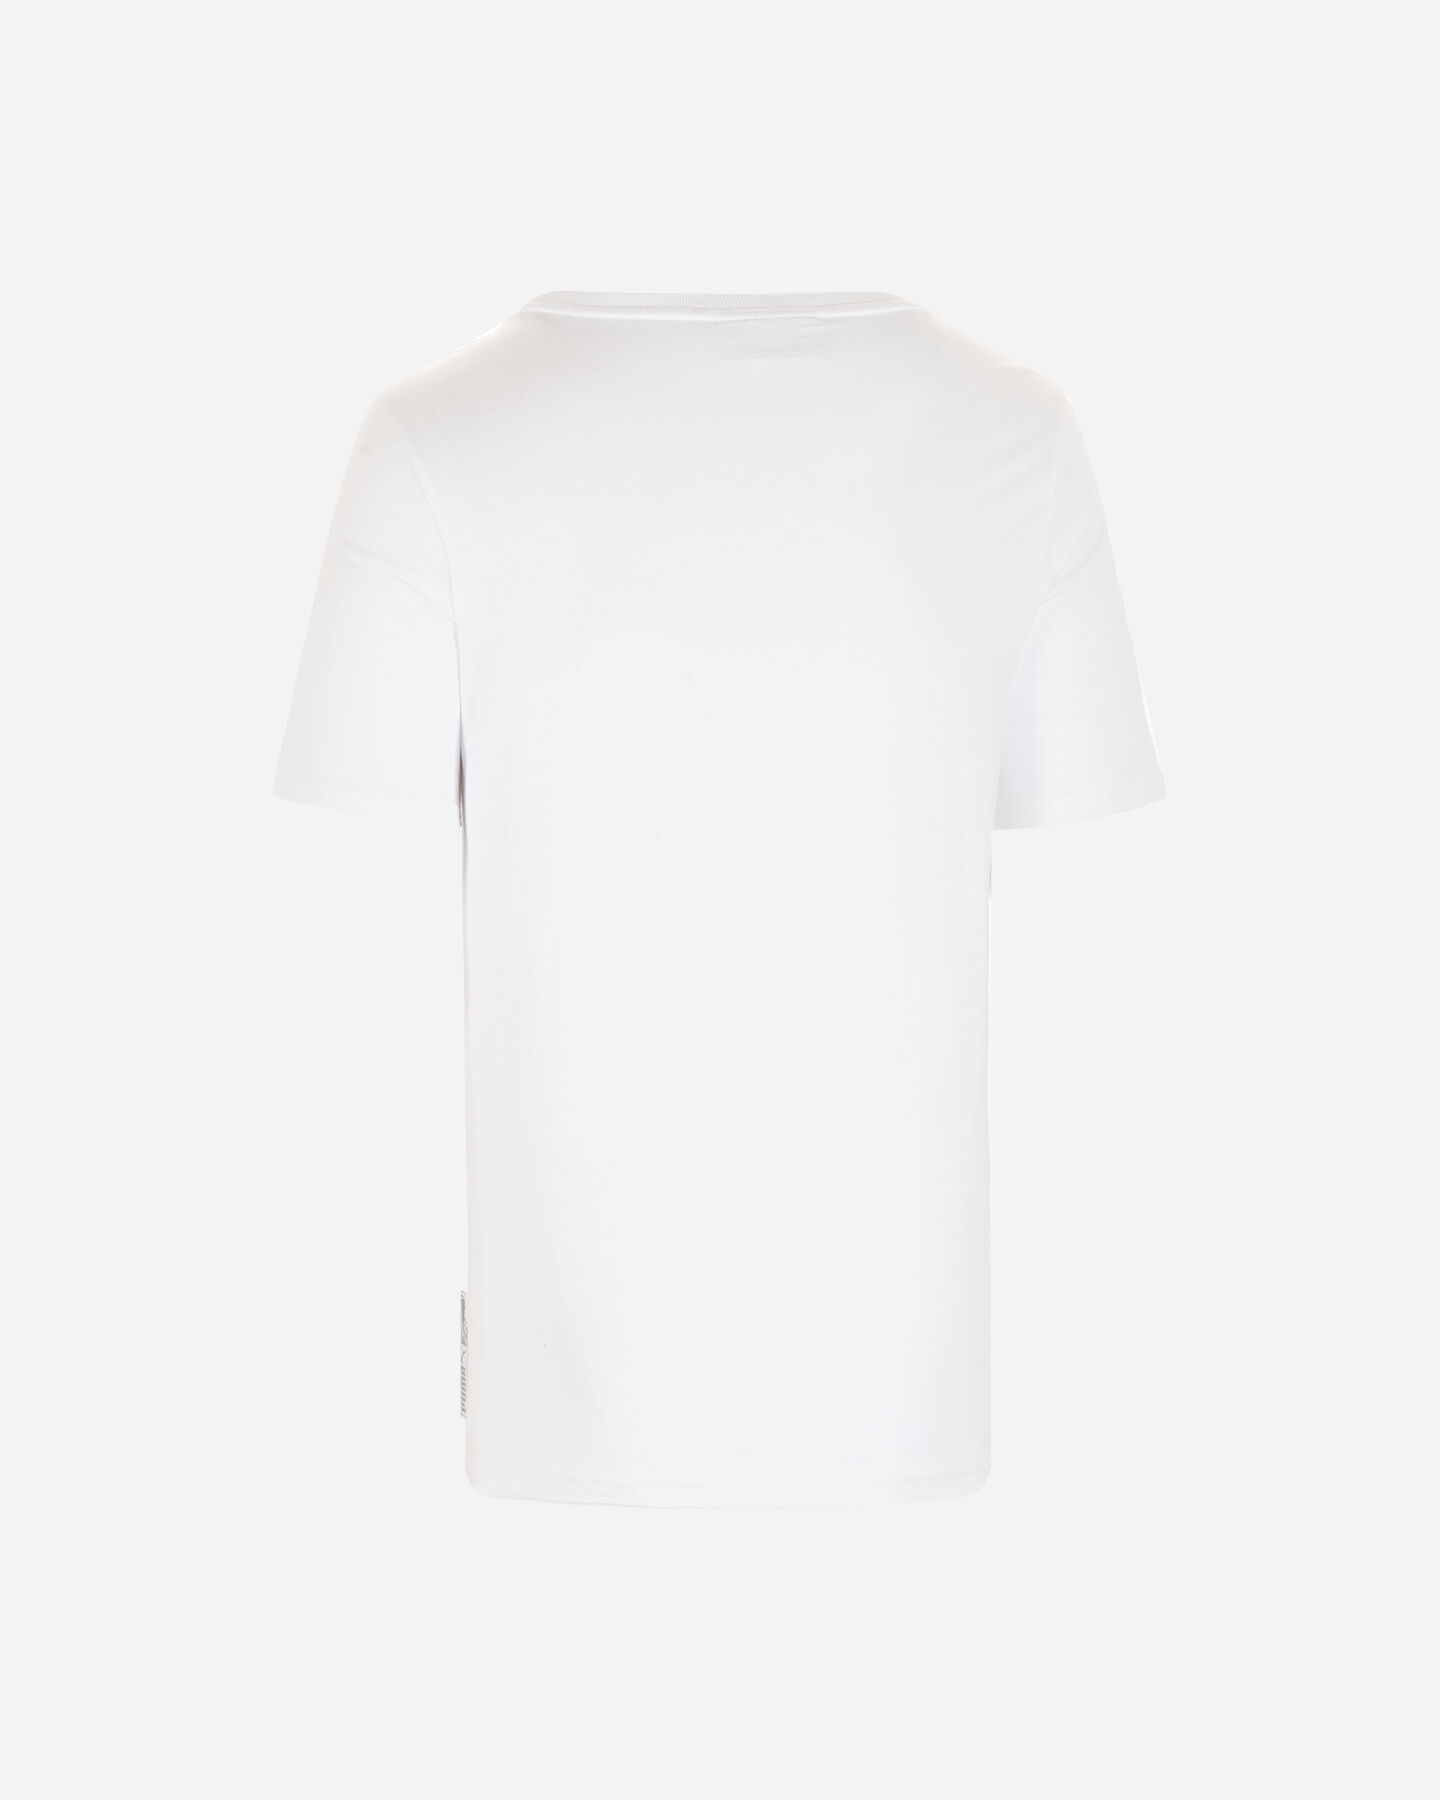  T-Shirt PUMA SL9 TEAM LOGO M S5371641|02|XS scatto 1